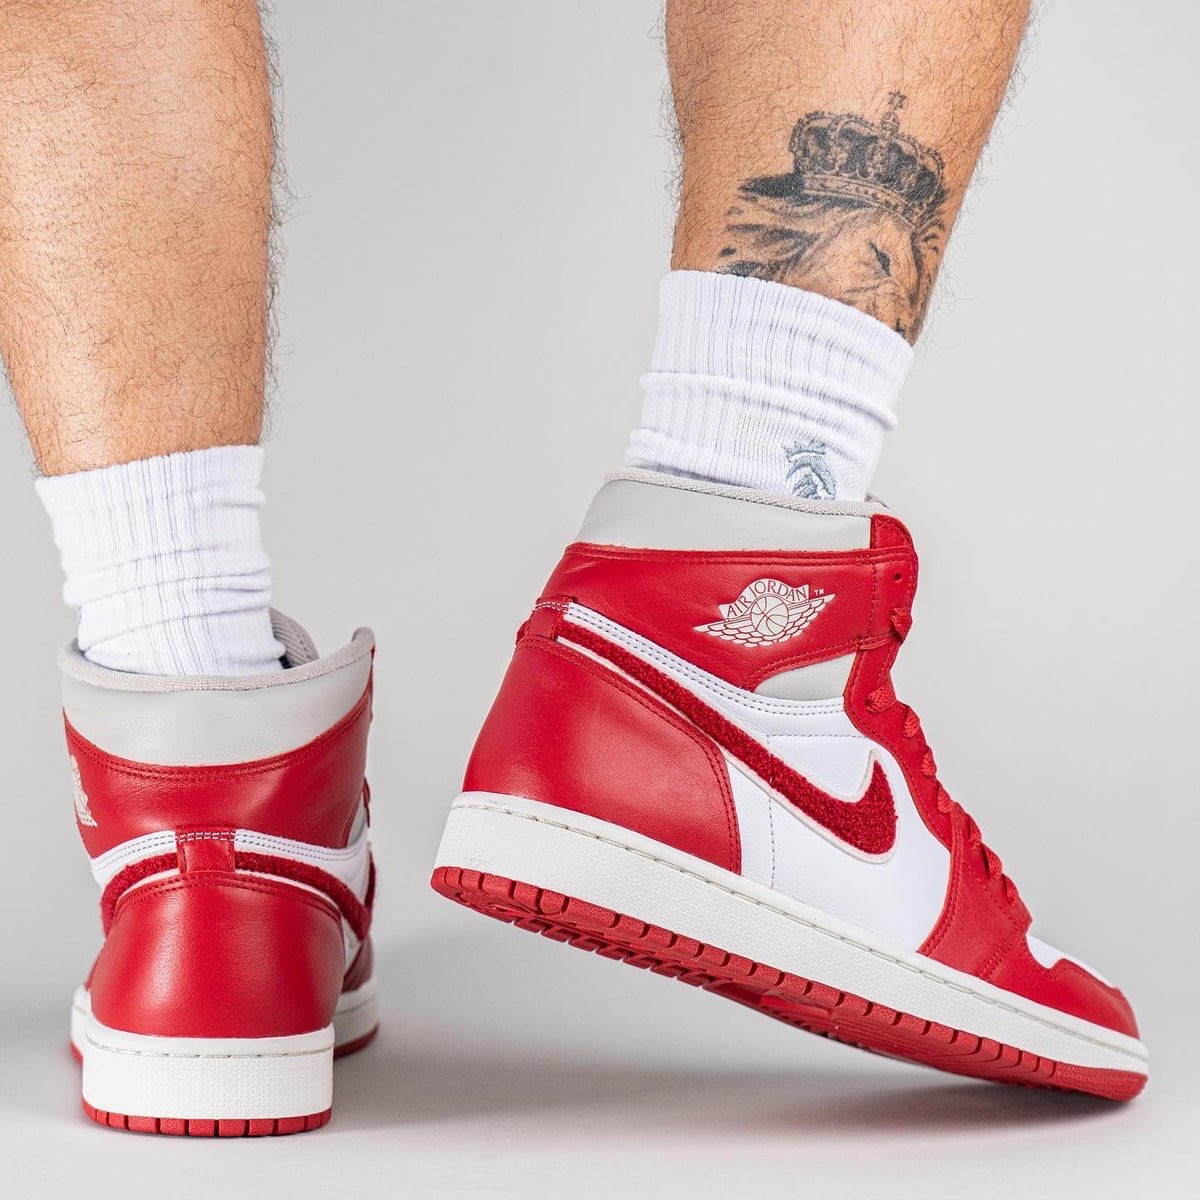 Nike】Wmns Air Jordan 1 Retro High OG “Newstalgia”が国内7月23日に